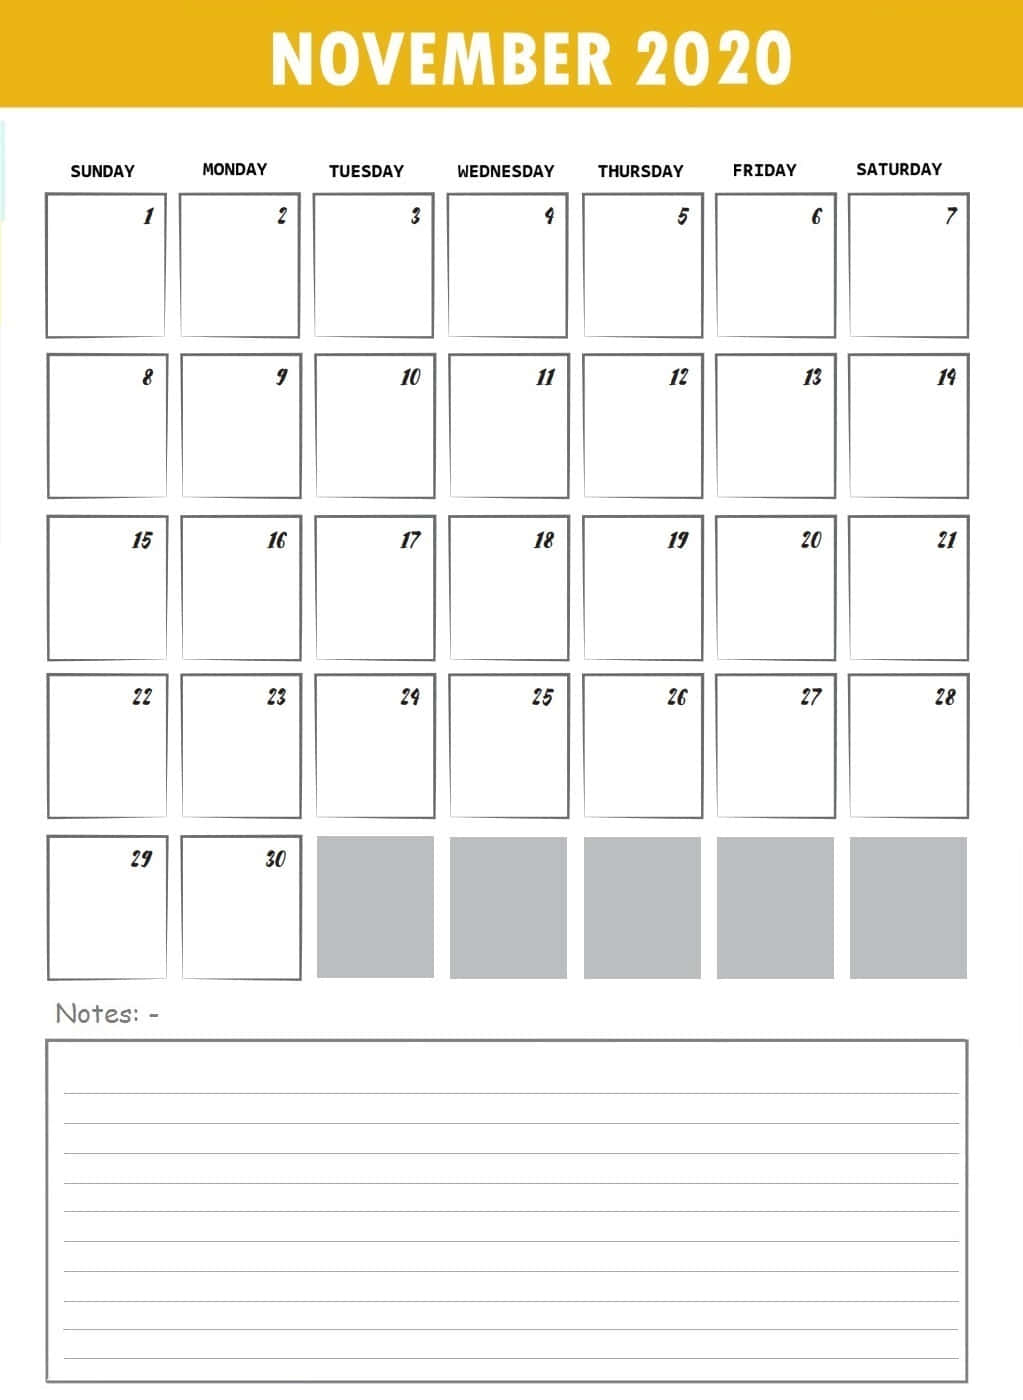 November 2020 Calendar Notepad Picture